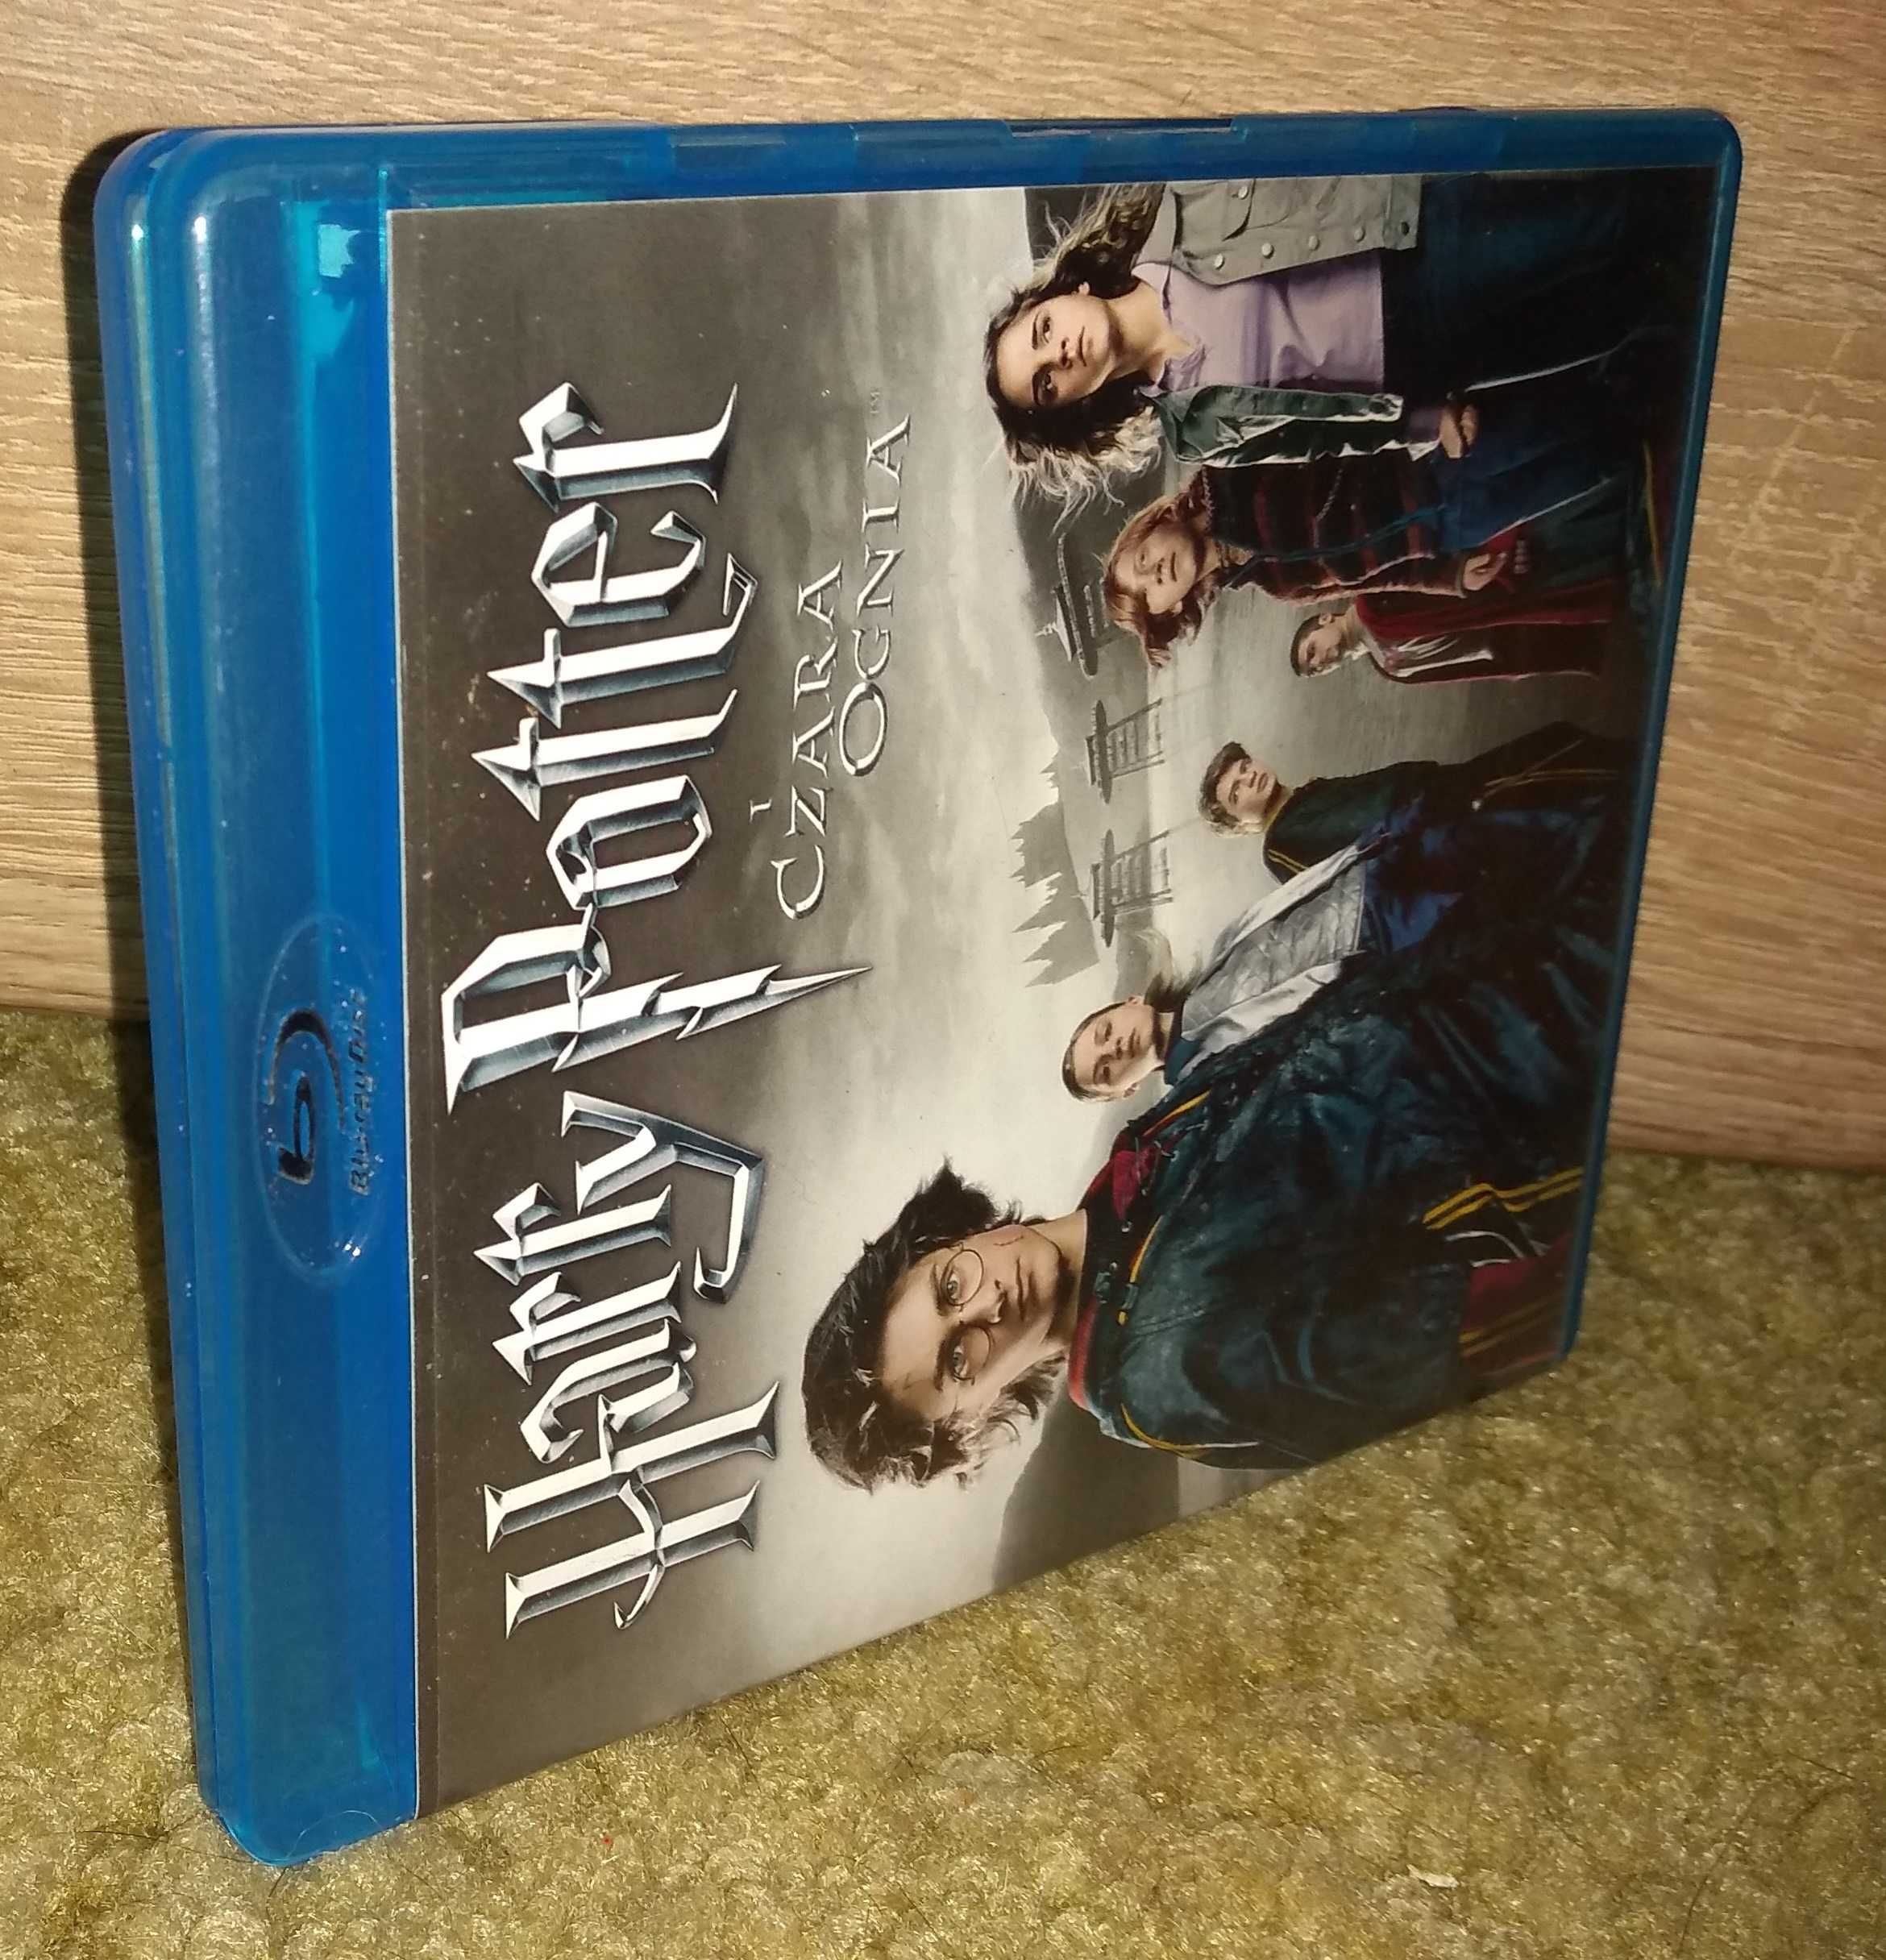 Harry Potter i czara ognia / Idealna-/ Blu-ray/ Dubbing PL